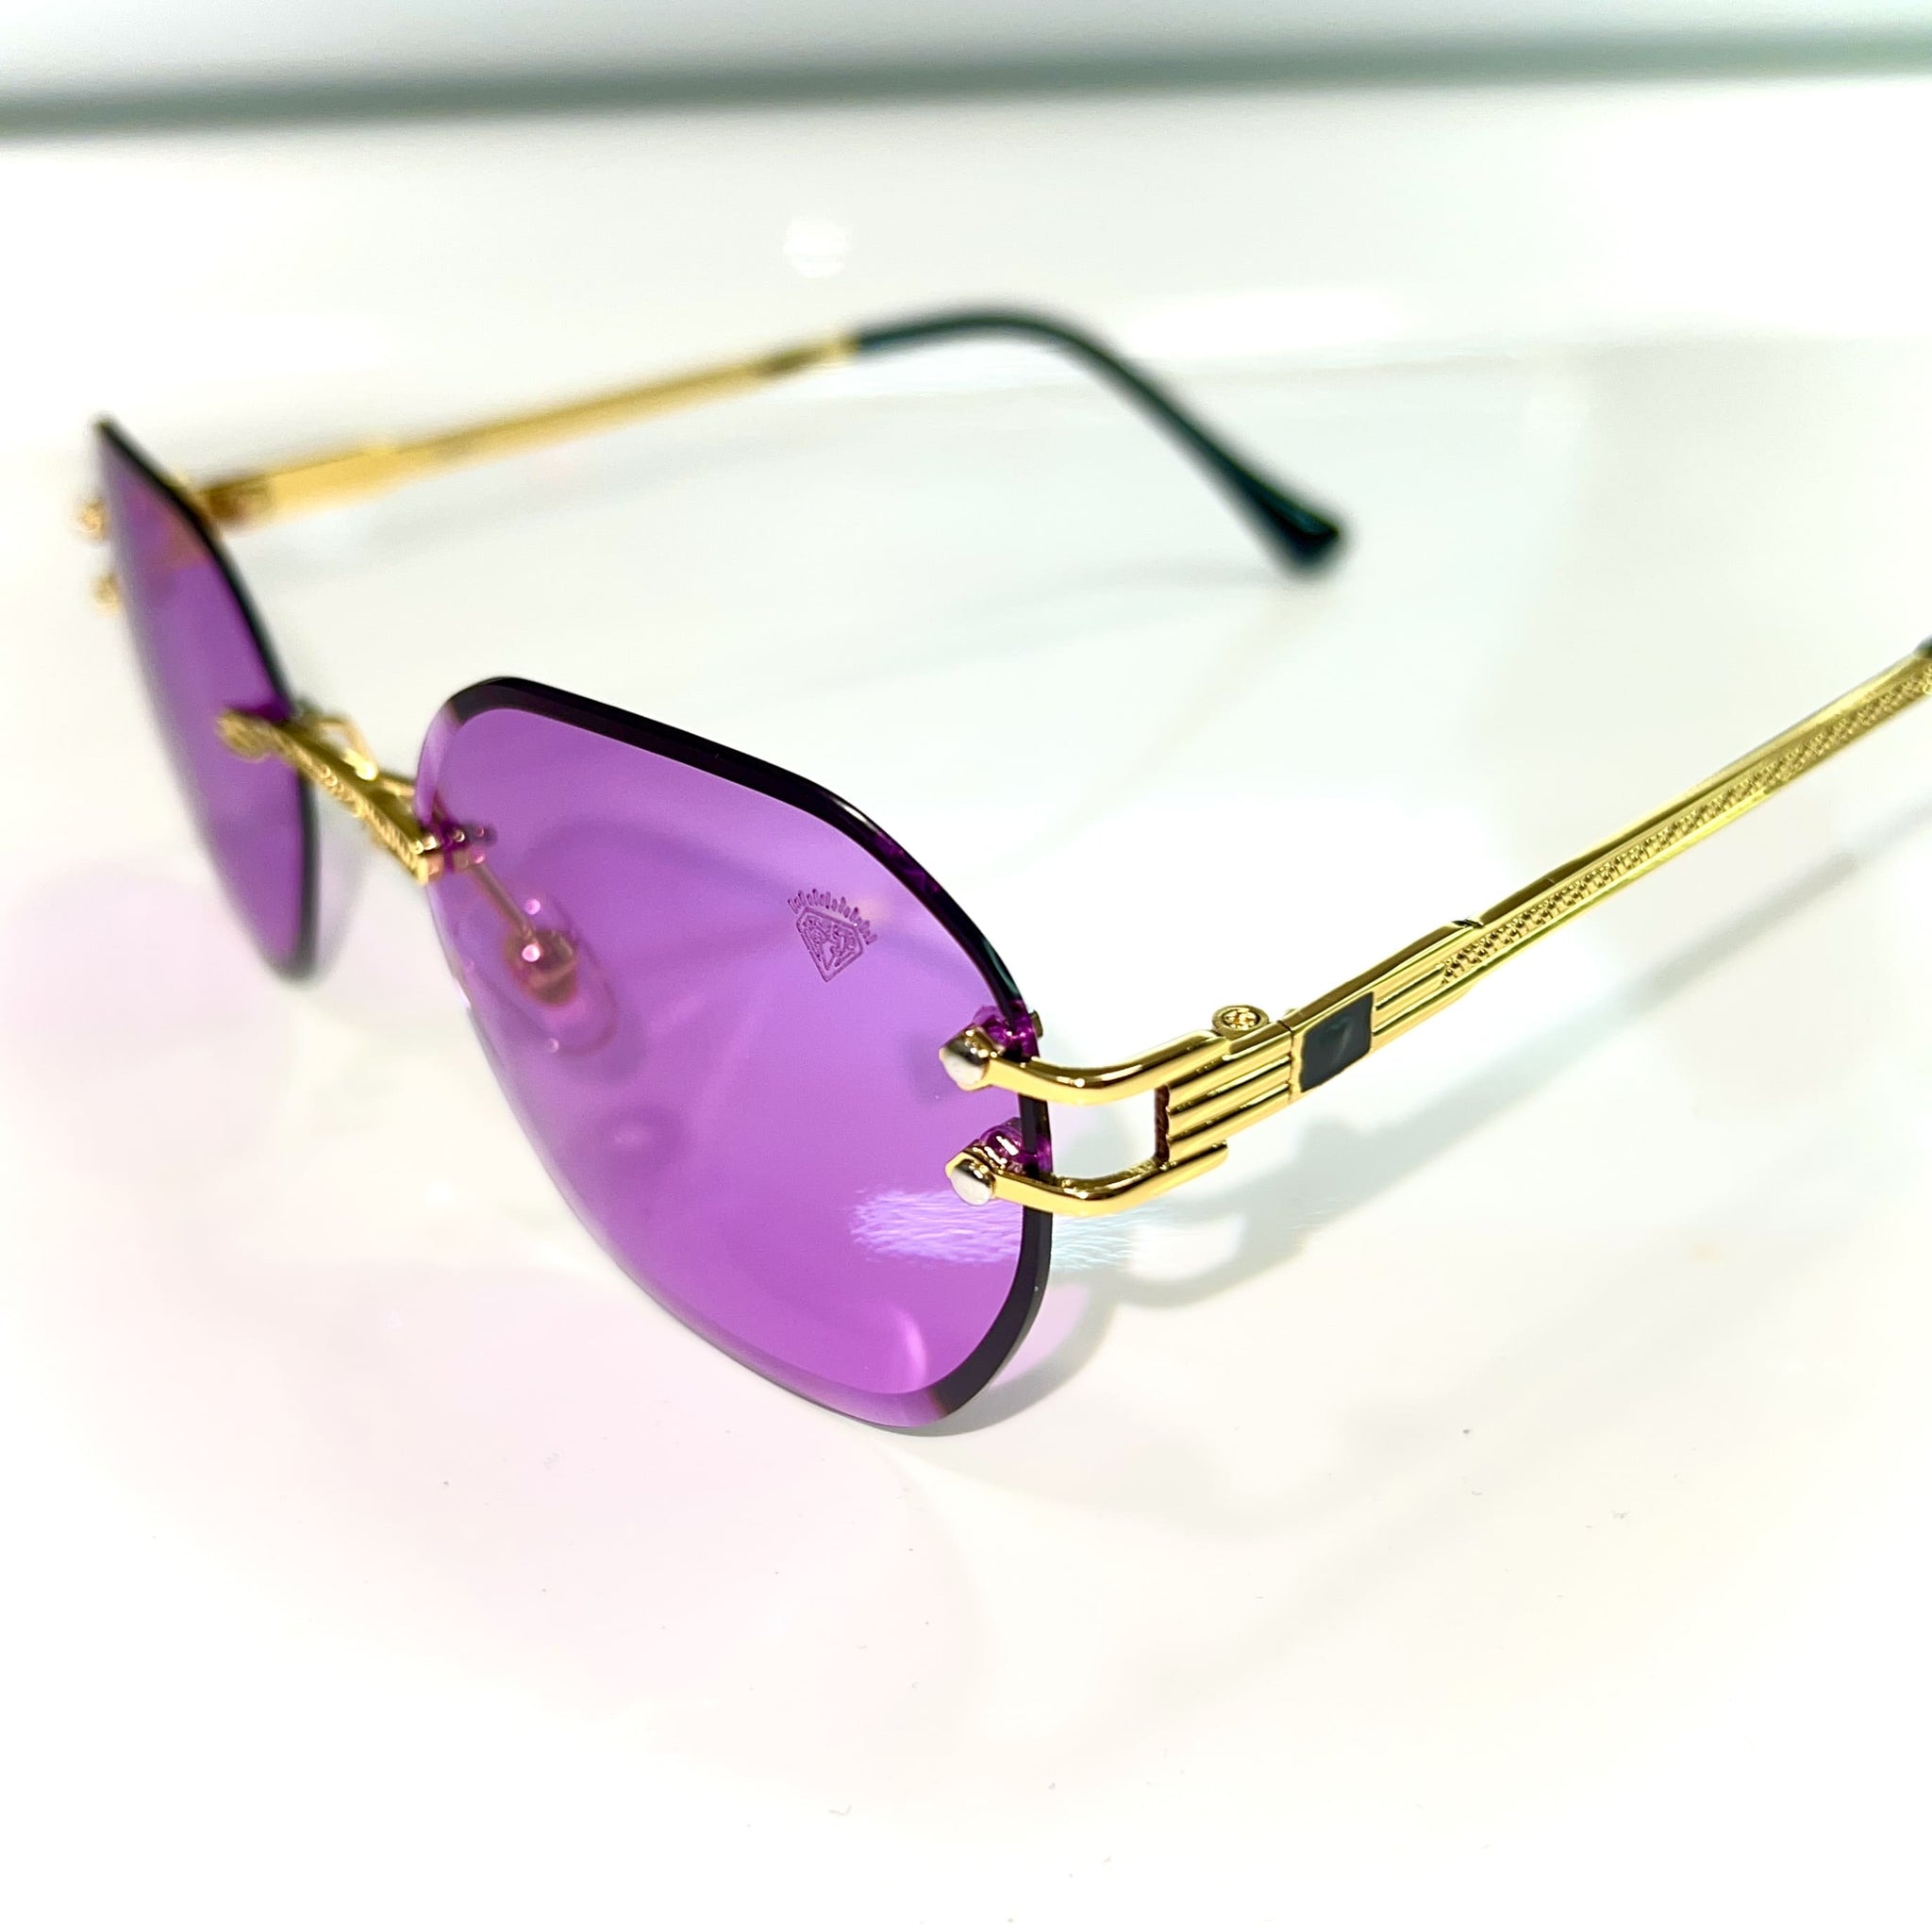 Pharaoh Glasses - Diamond cut / 14 carat gold plated - Purple Shade - Sehgal Glasses